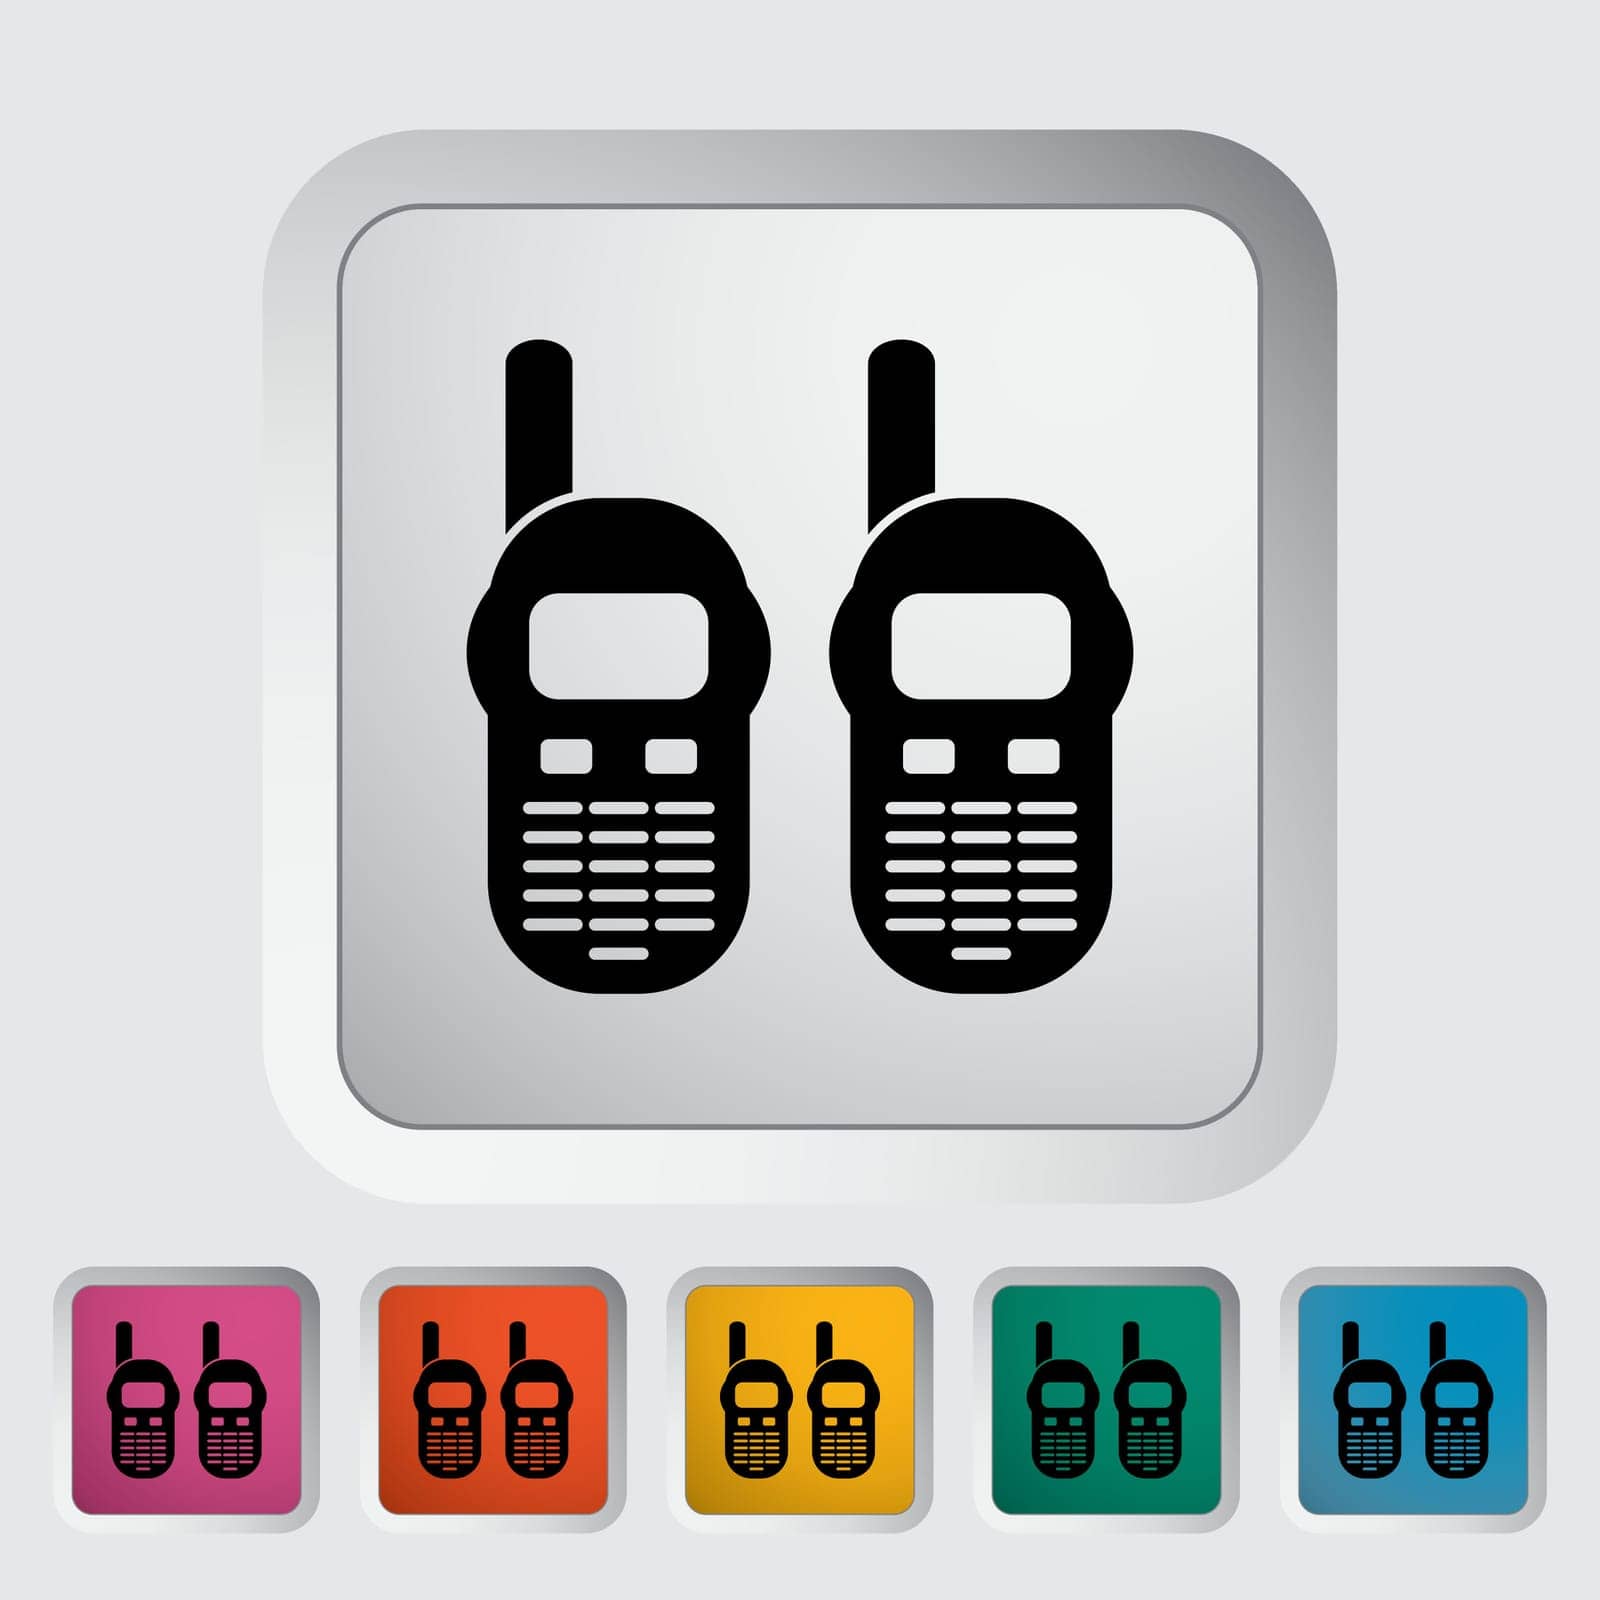 Portable radio. Single flat icon on the button. Vector illustration.